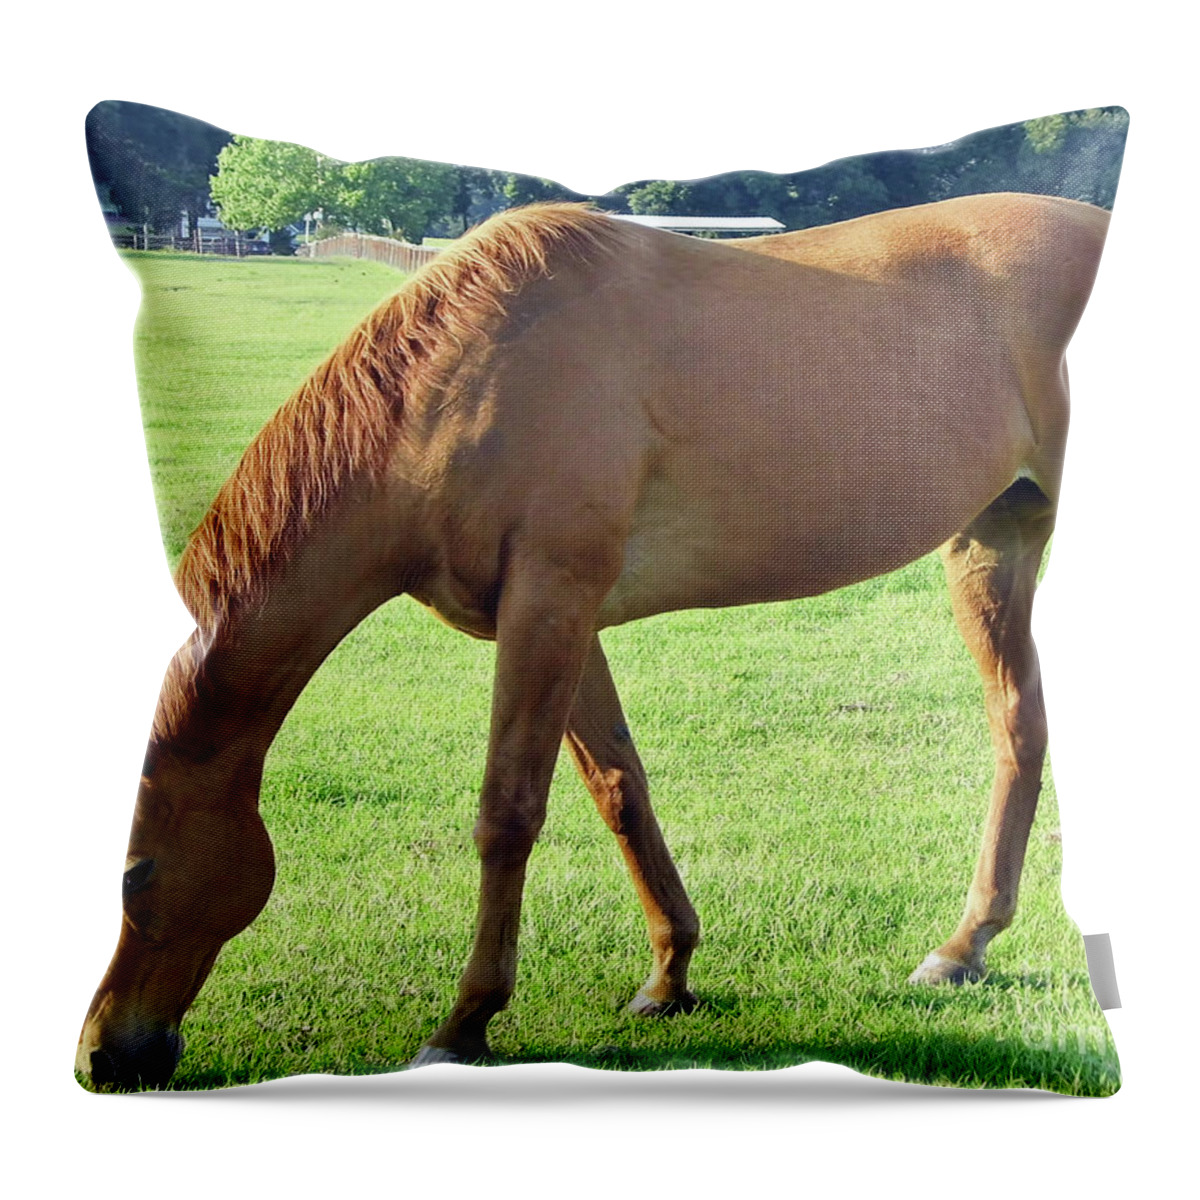 Horse Throw Pillow featuring the photograph Enjoying The Grass by D Hackett